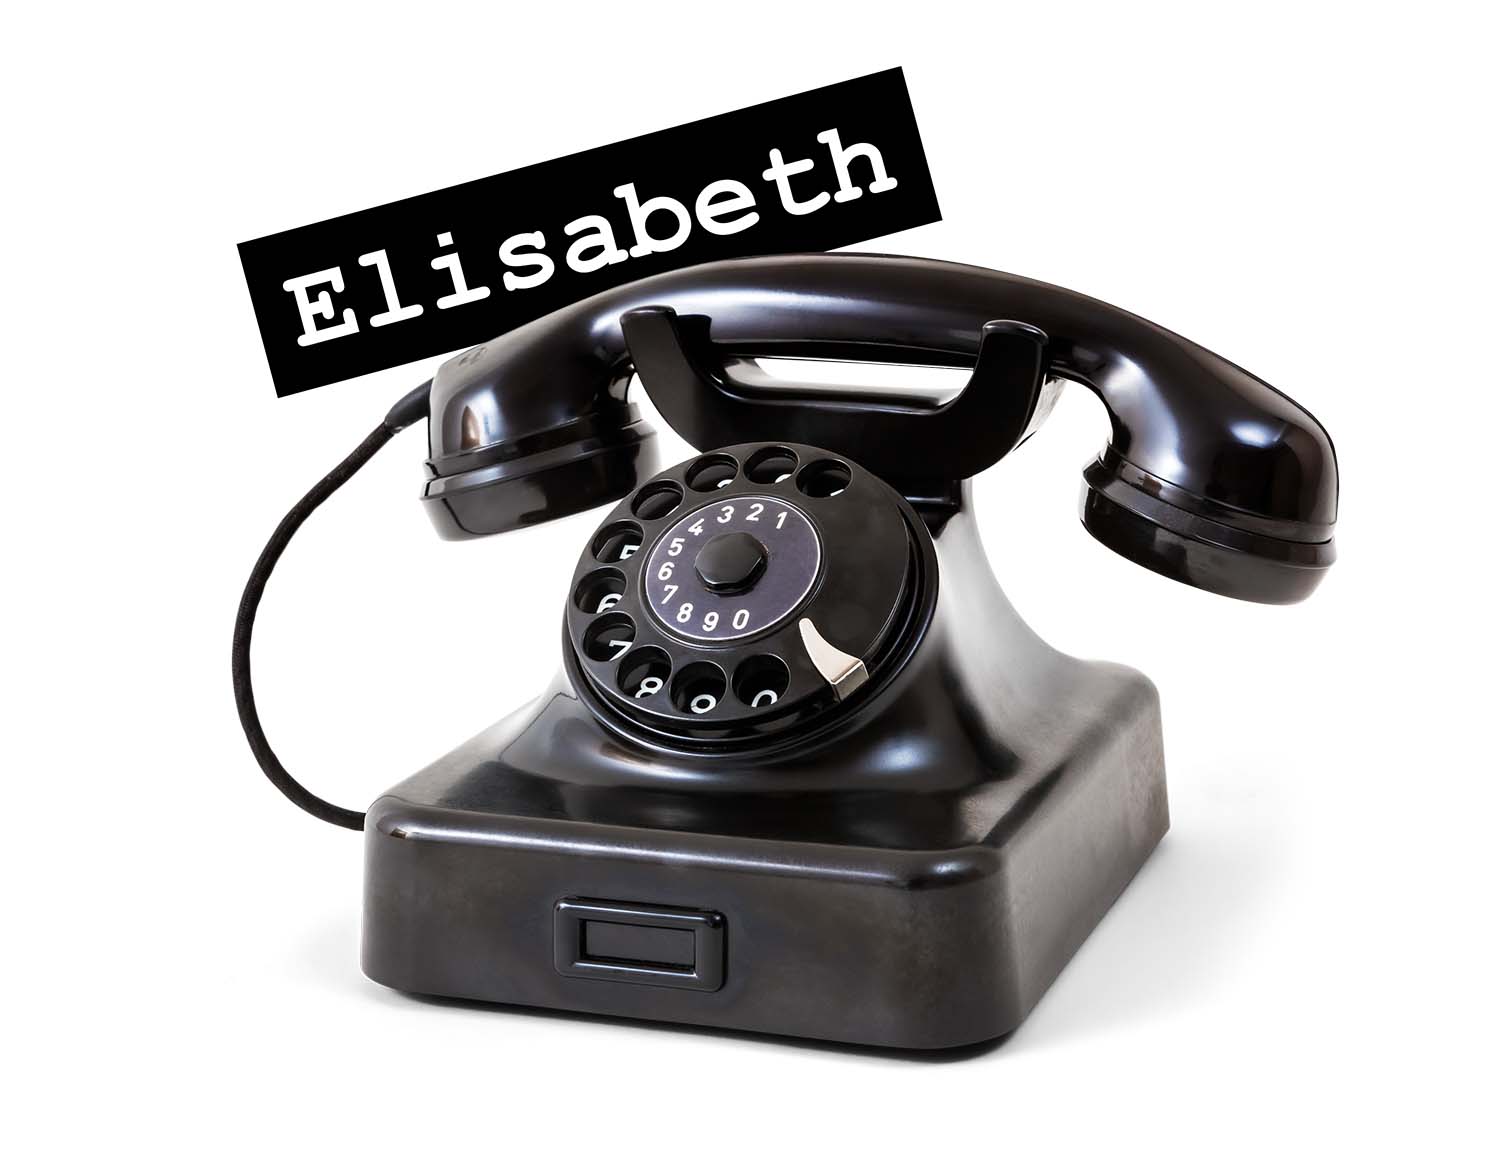 audio-gaestebuch-elisabeth-telefon-mieten-slider.jpg